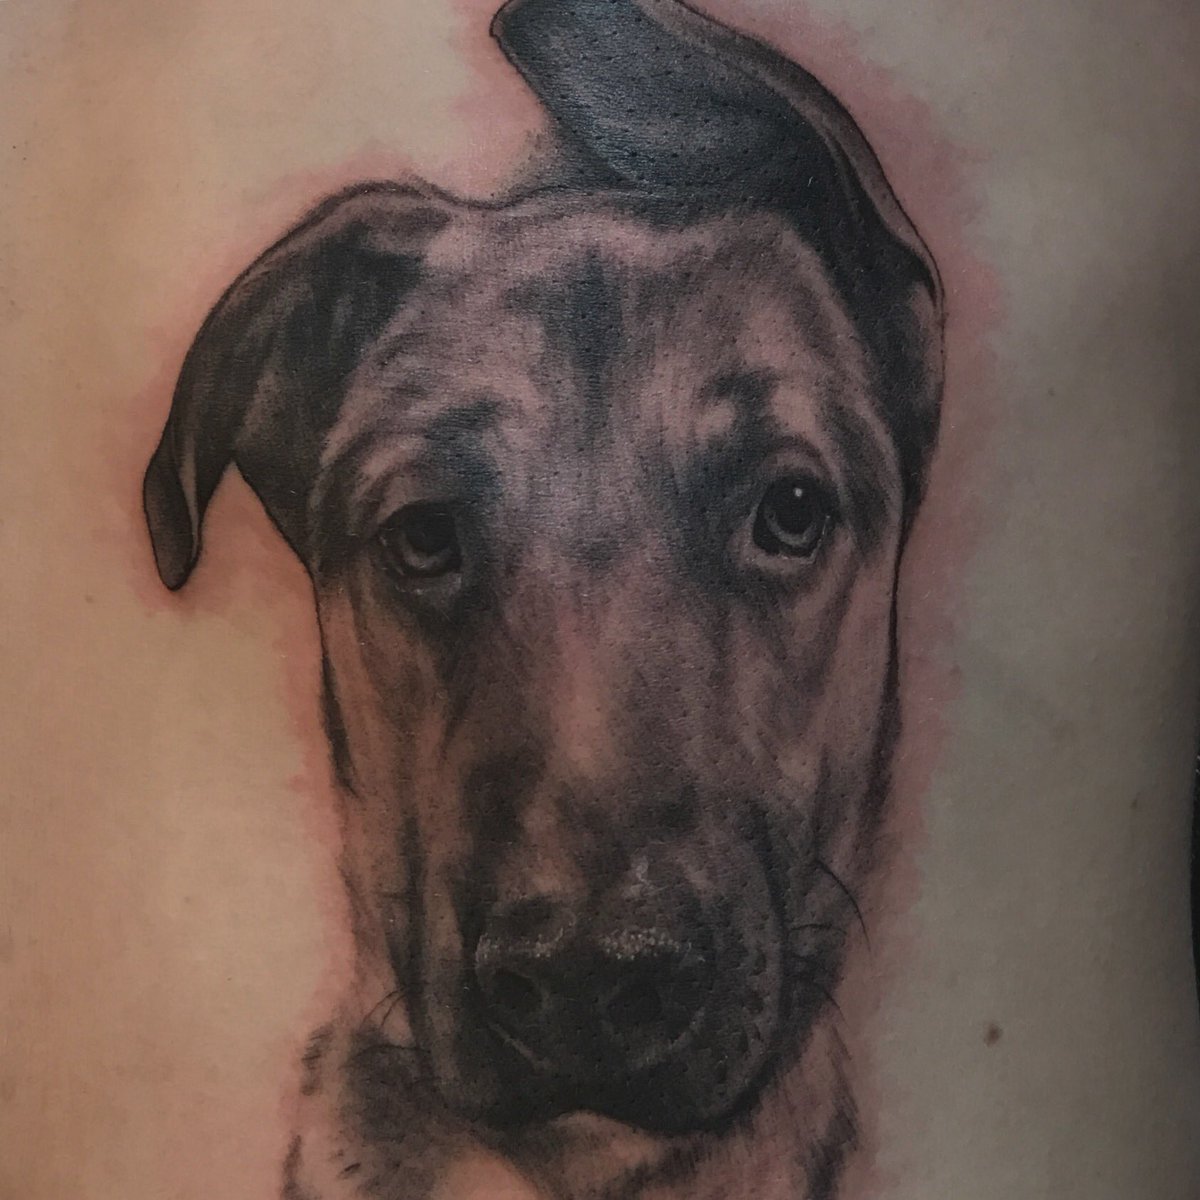 Von D on Twitter: "I love tattooing pet portraits. ❤ https://t.co/UBe1FPpEsm" / Twitter